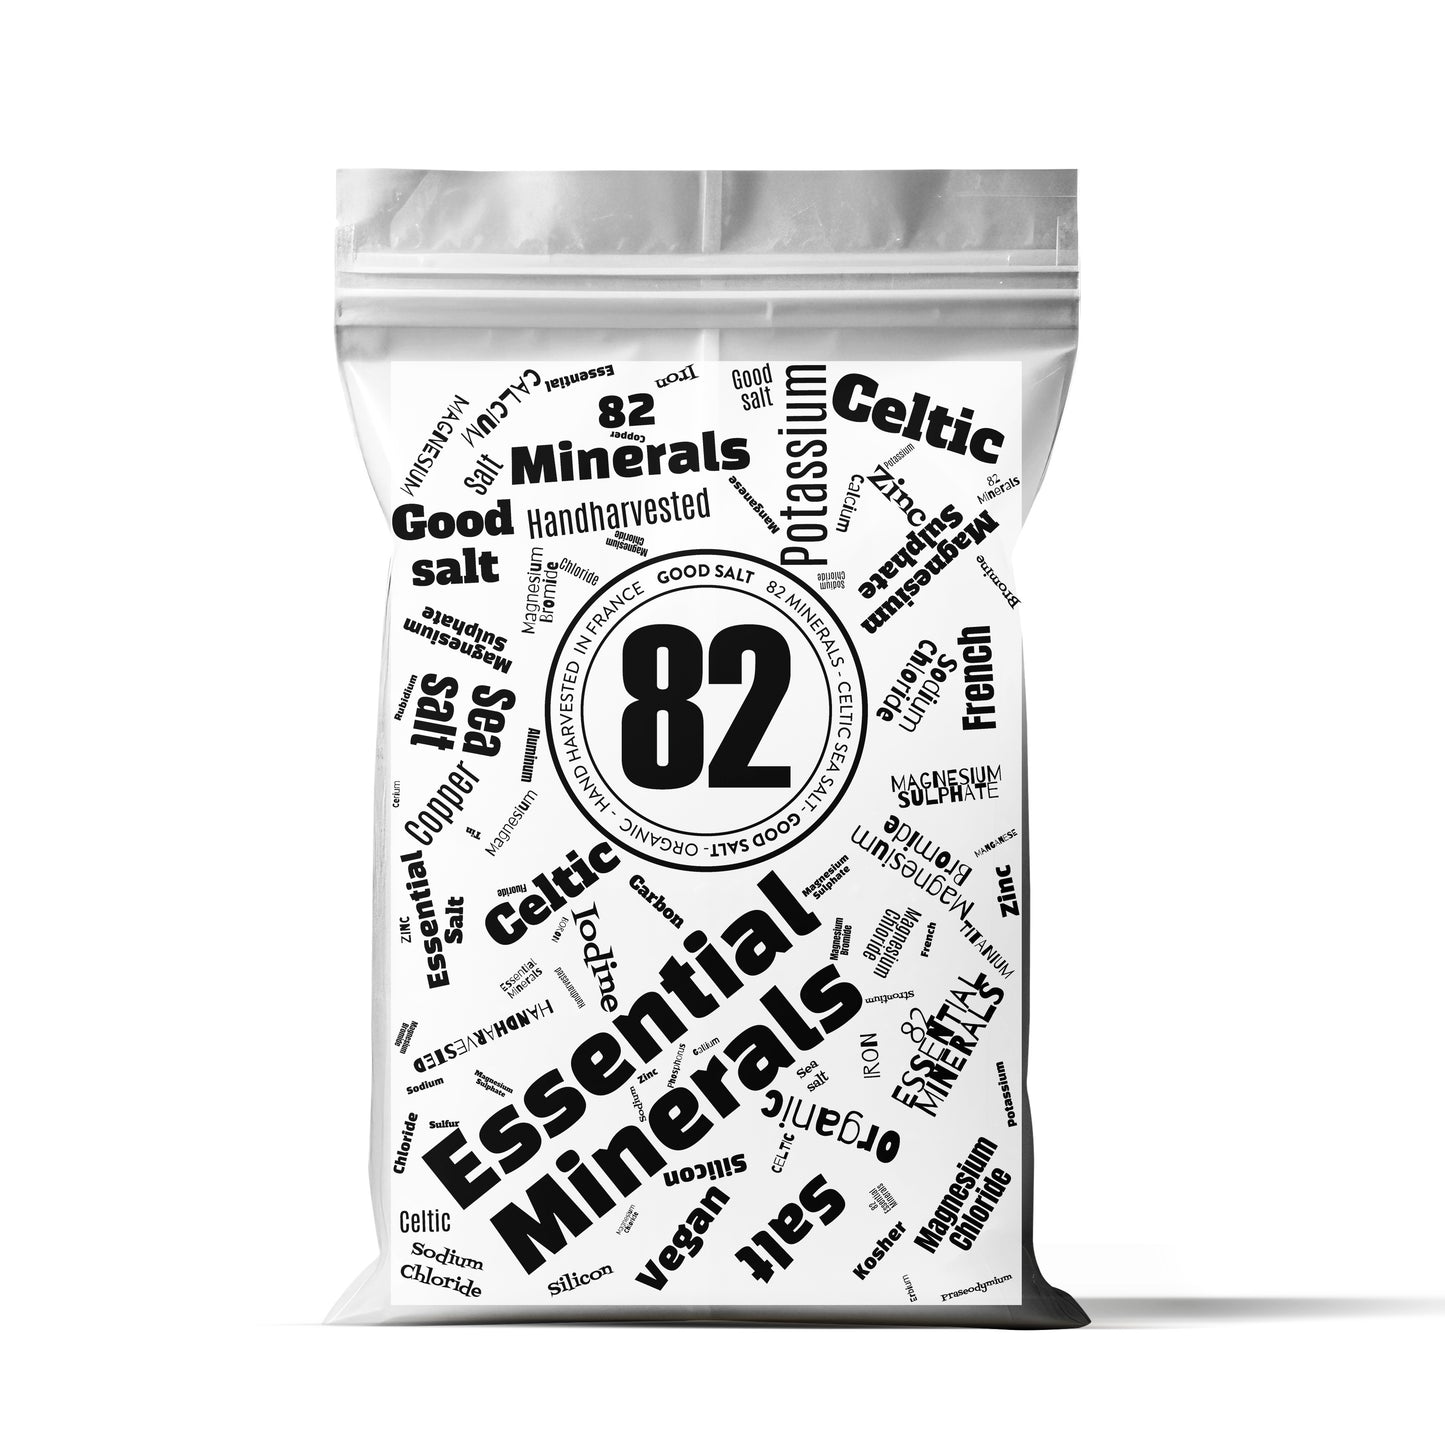 Celtic Salt - 82 minerals (FAST FREE UK SHIPPING)